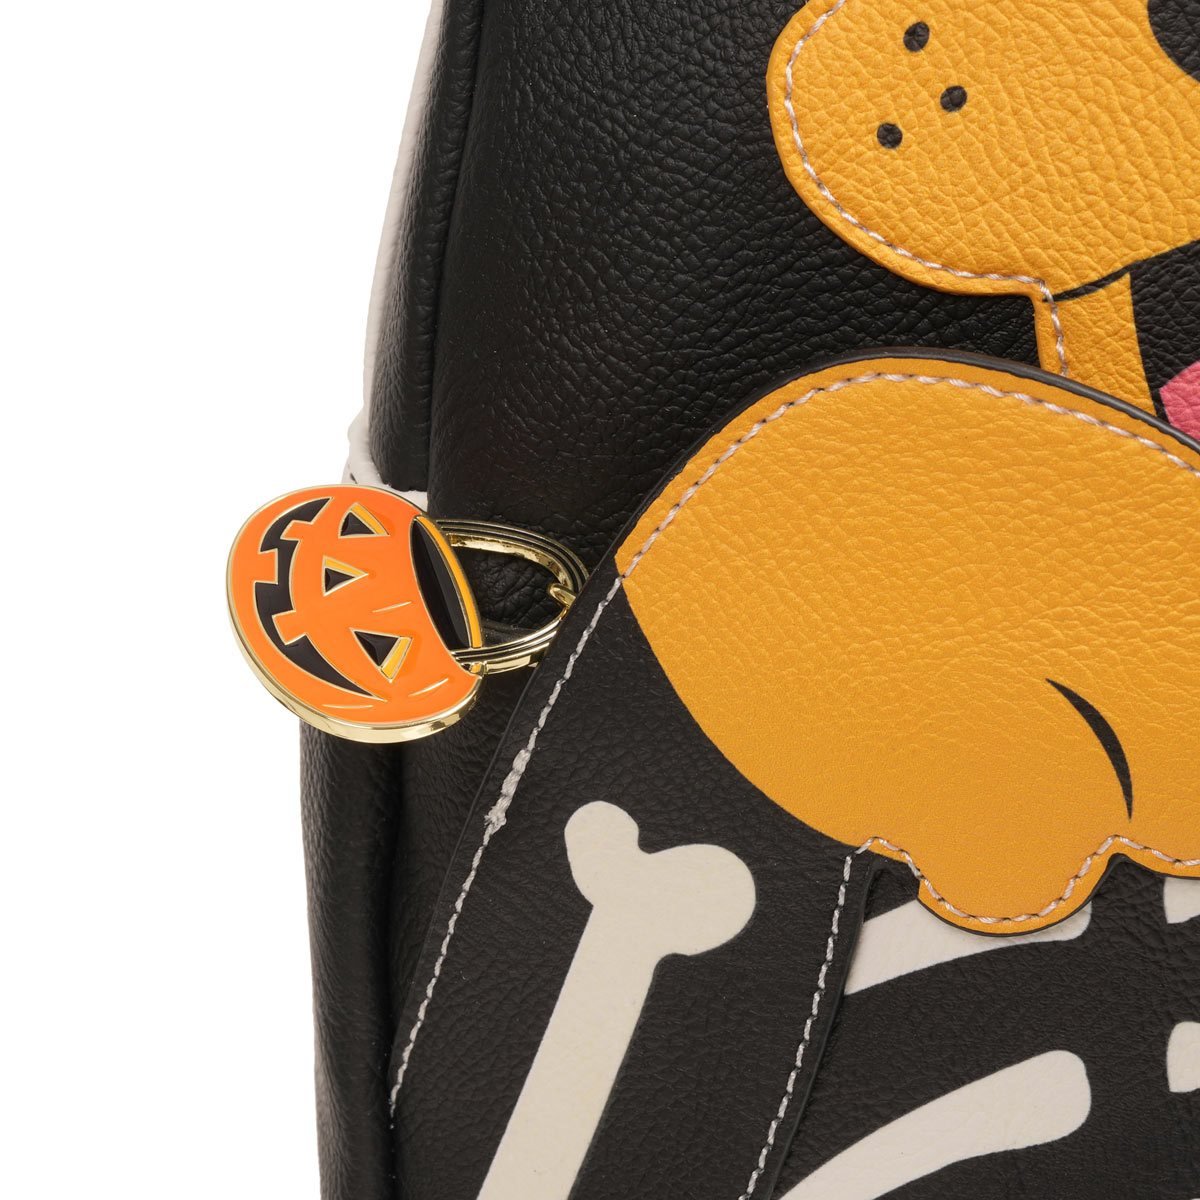 Disney Pluto Cosplay Mini Backpack